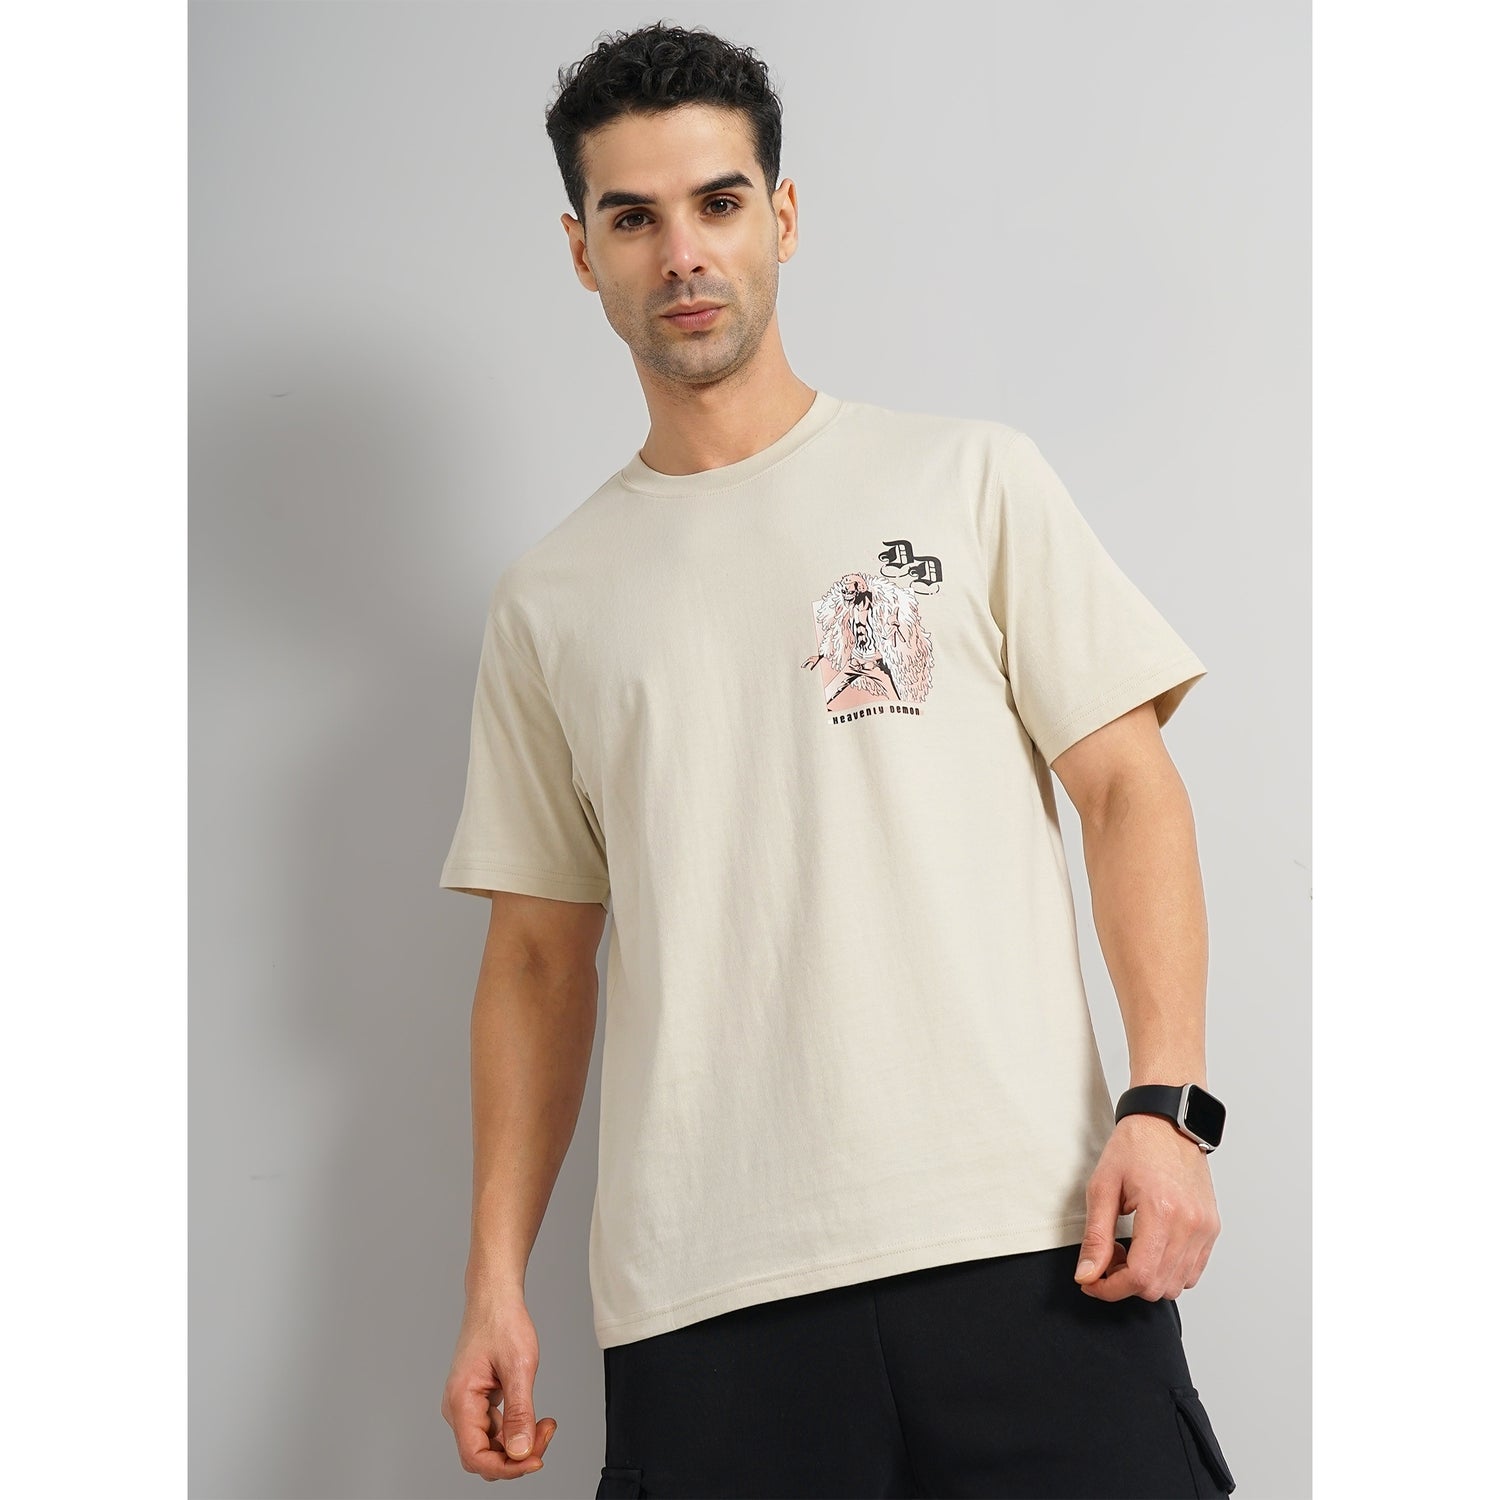 One Piece - Men's Beige Printed Regular Fit Pure Cotton Tshirt (LFEACEIN)